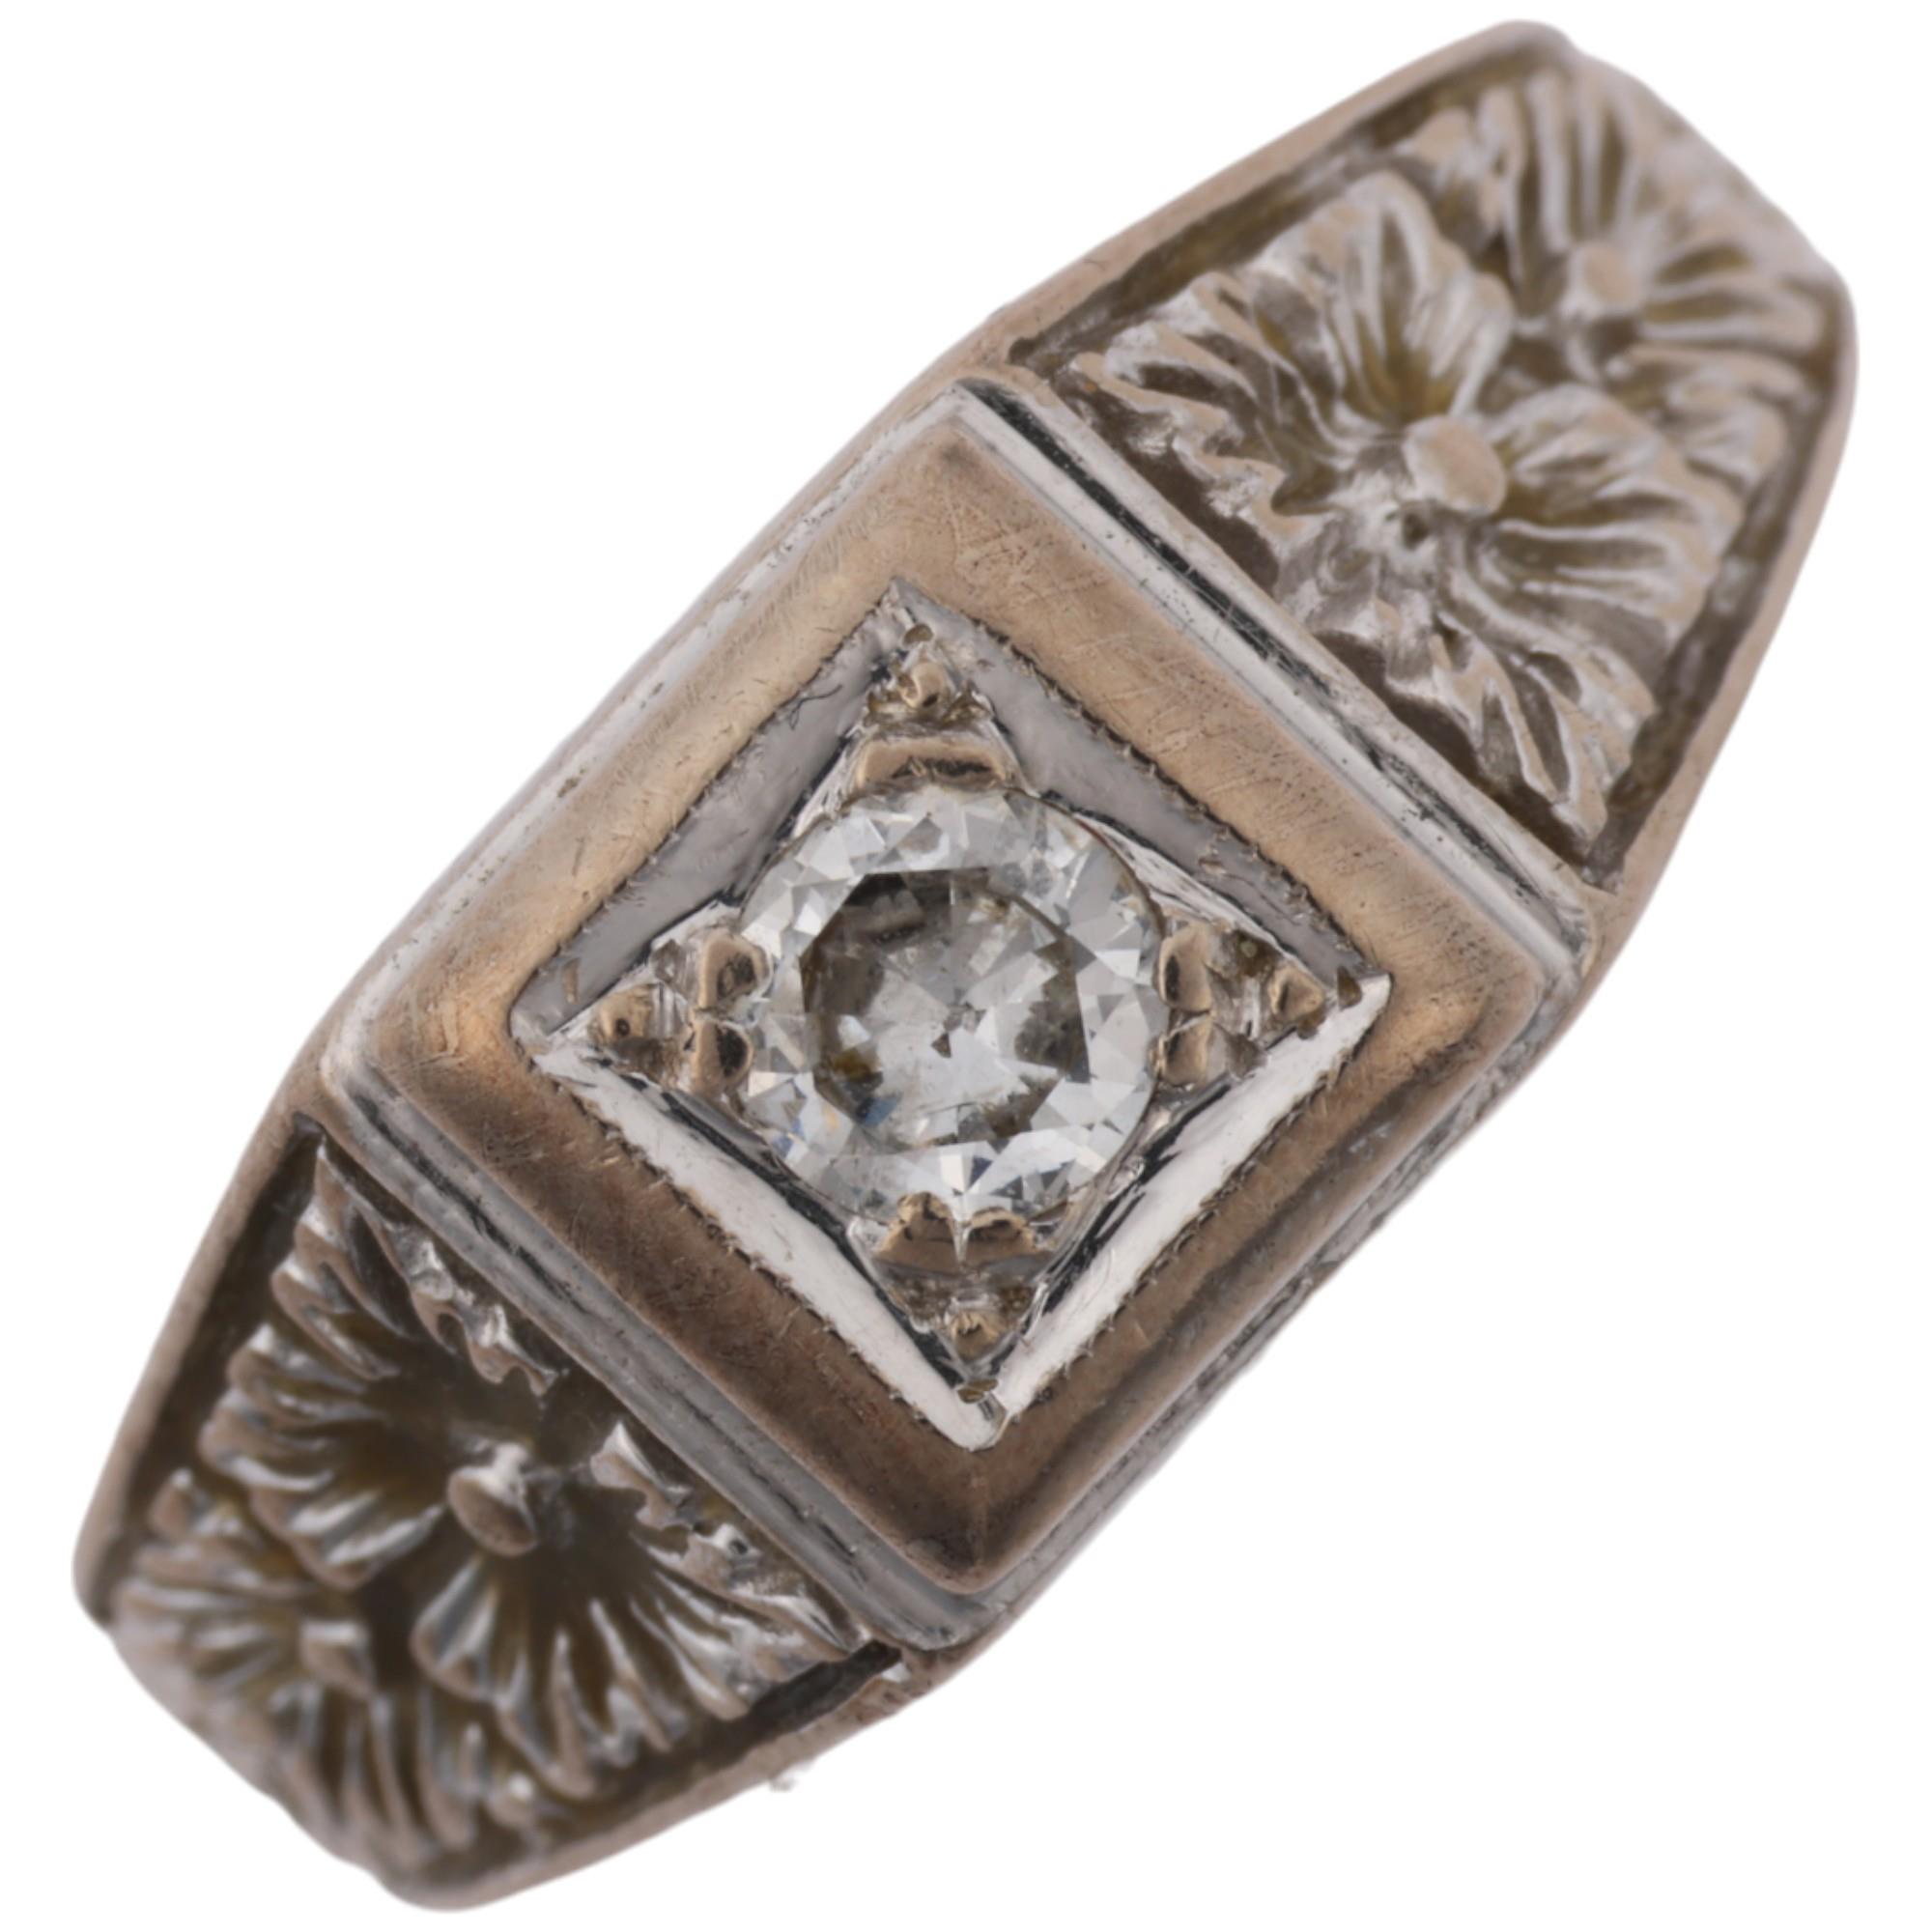 An Art Deco style platinum 0.2ct solitaire diamond ring, set with modern round brilliant-cut diamond